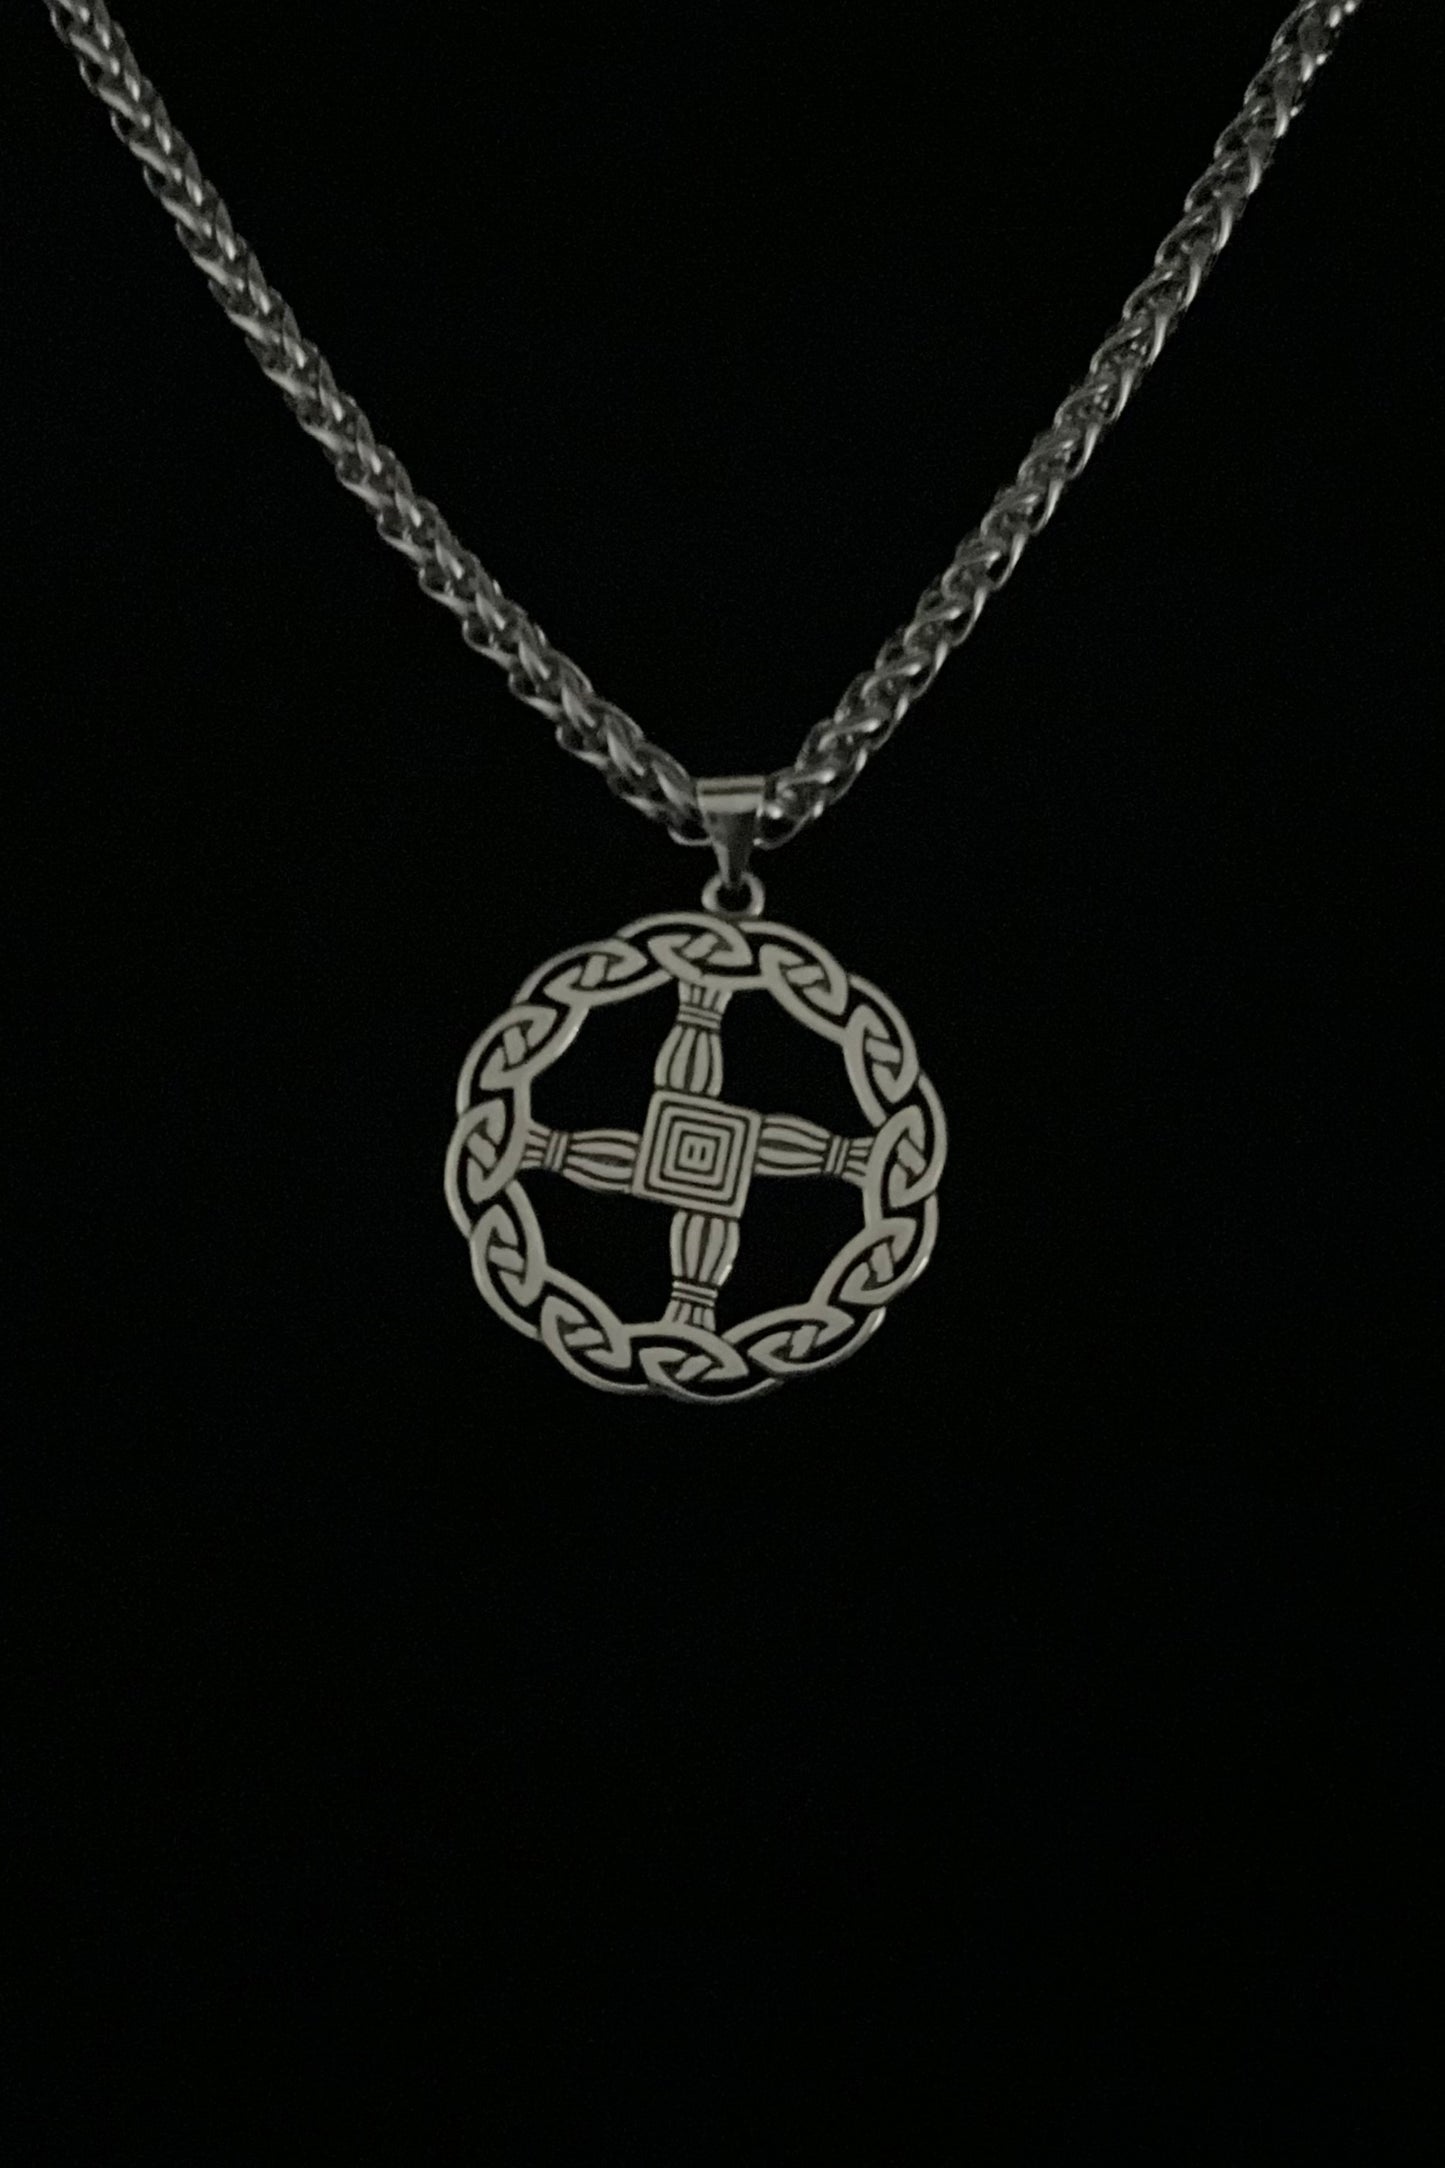 Large 925 Sterling Silver Irish Celtic St. Brigid's Cross Pendant + Free Chain Necklace